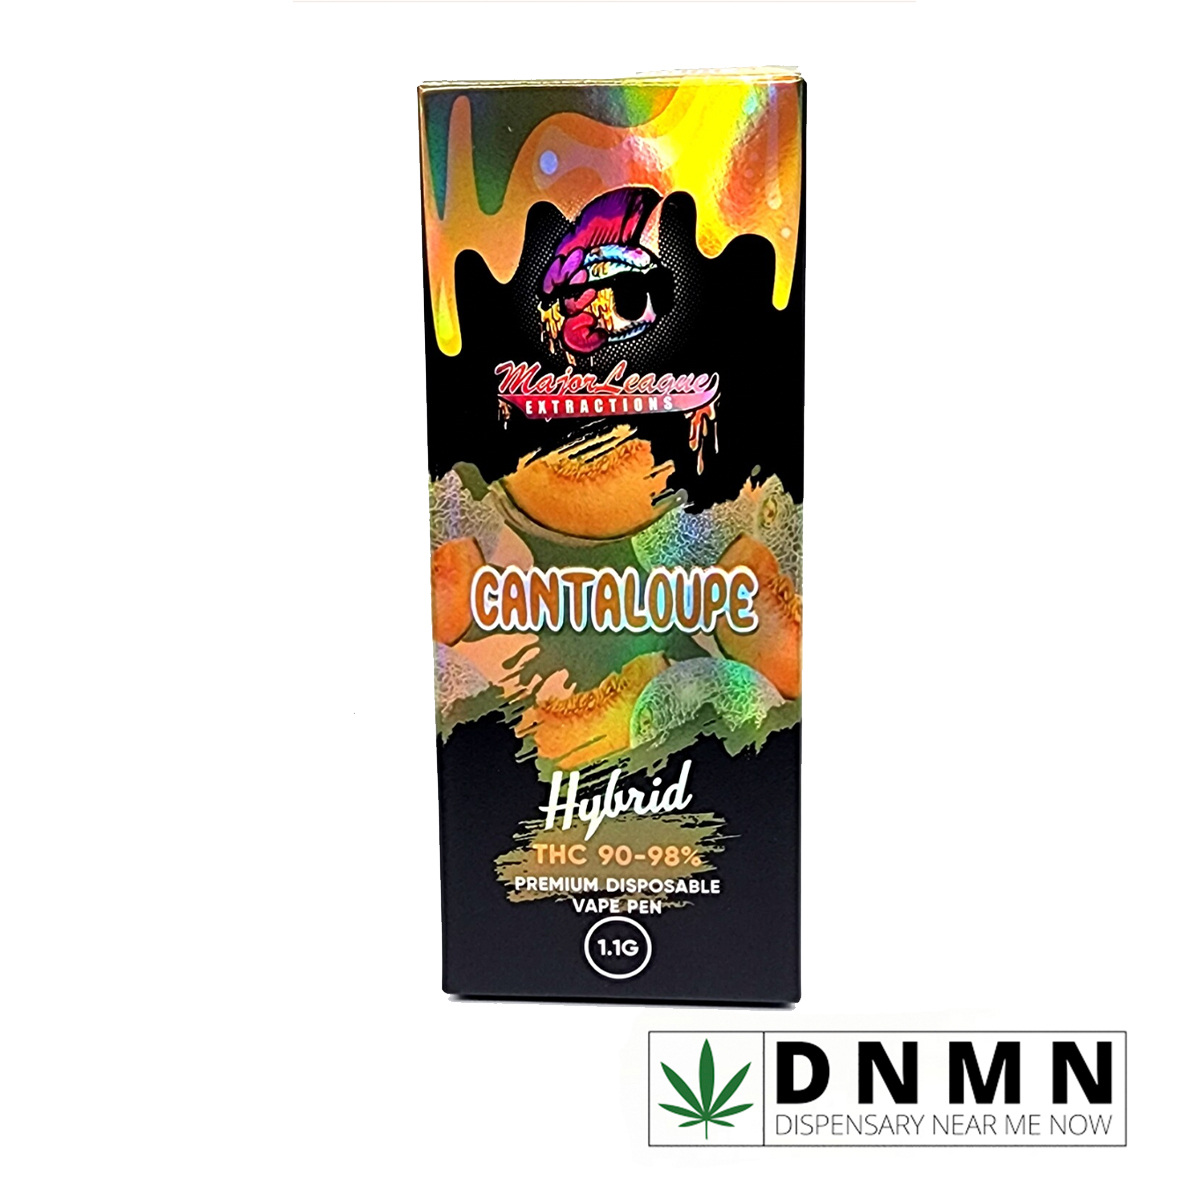 Major League Extractions - Cantaloupe Disposable Vape Pen | Buy Vape Online| Dispensary Near Me